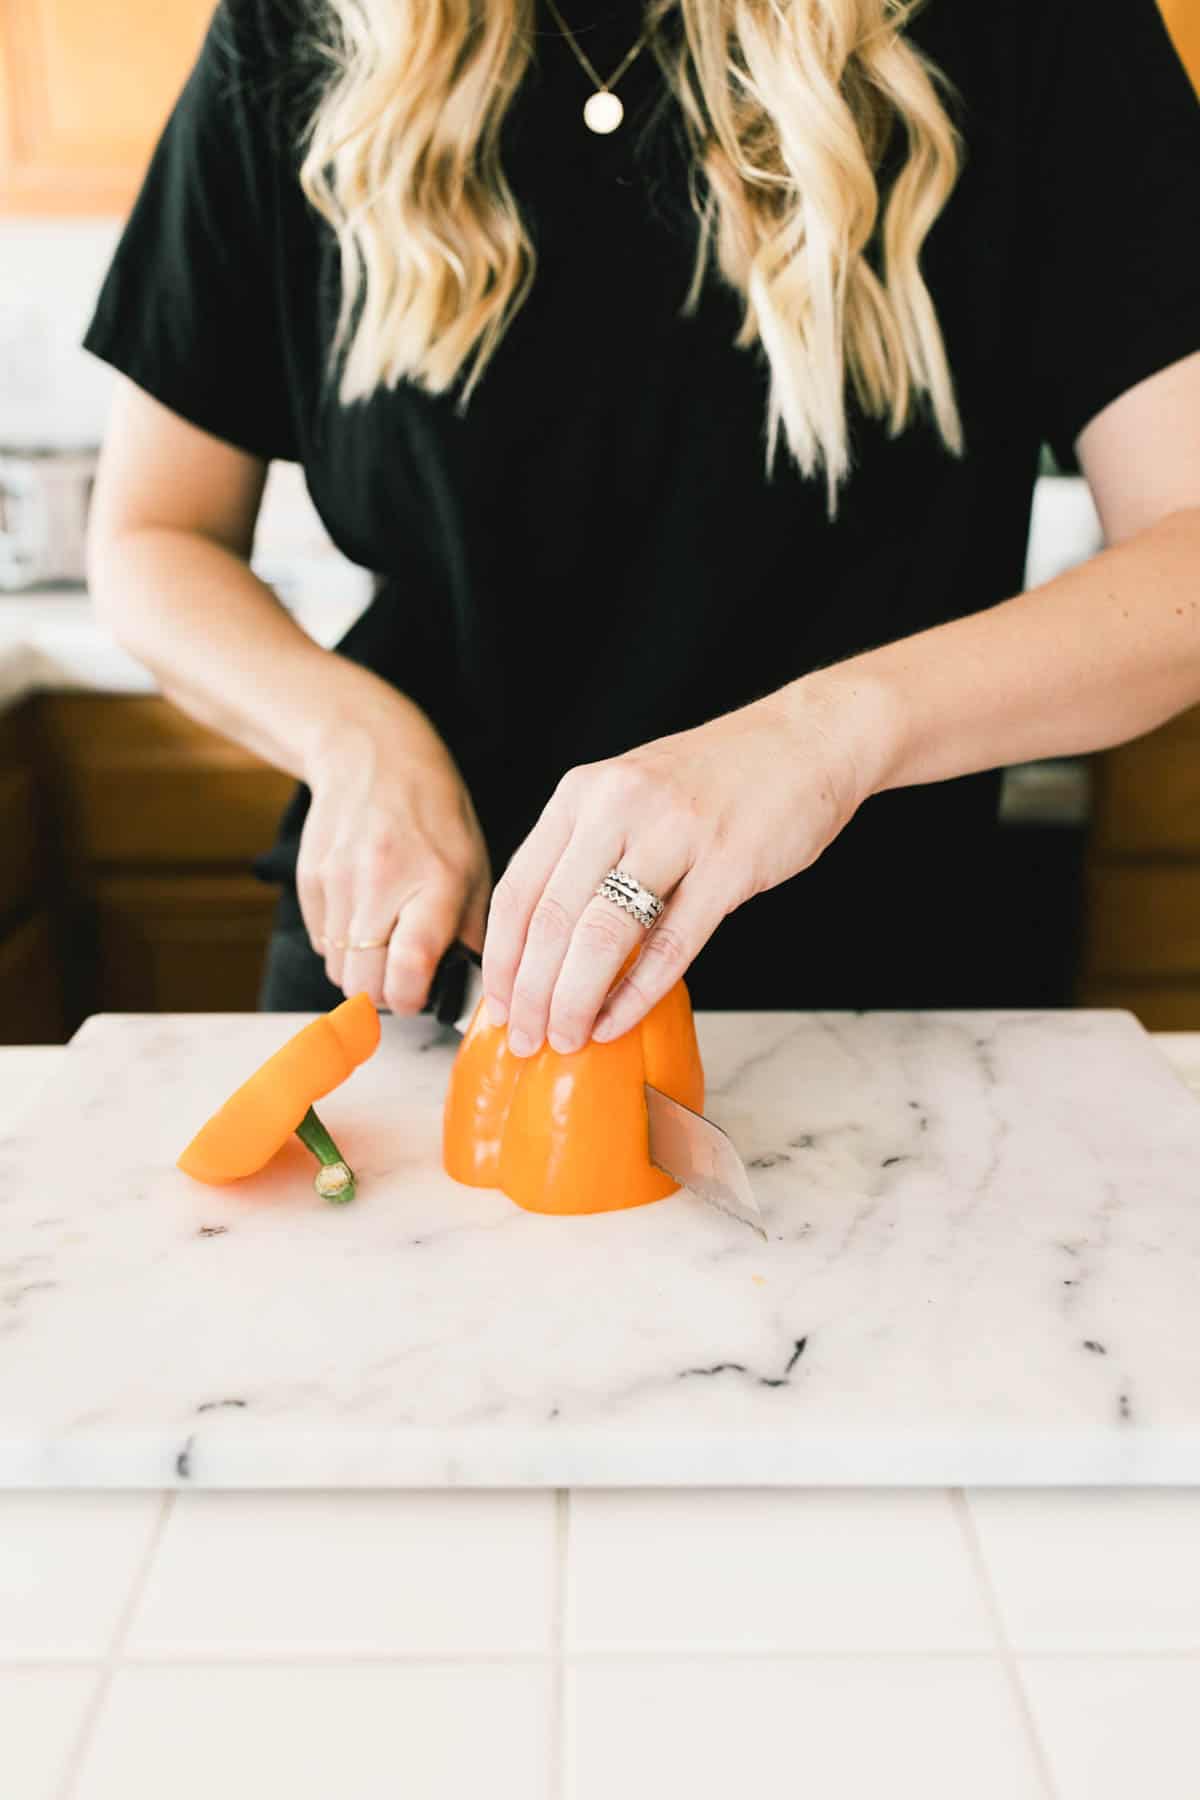 A woman cutting an orange bell pepper on a cutting board.